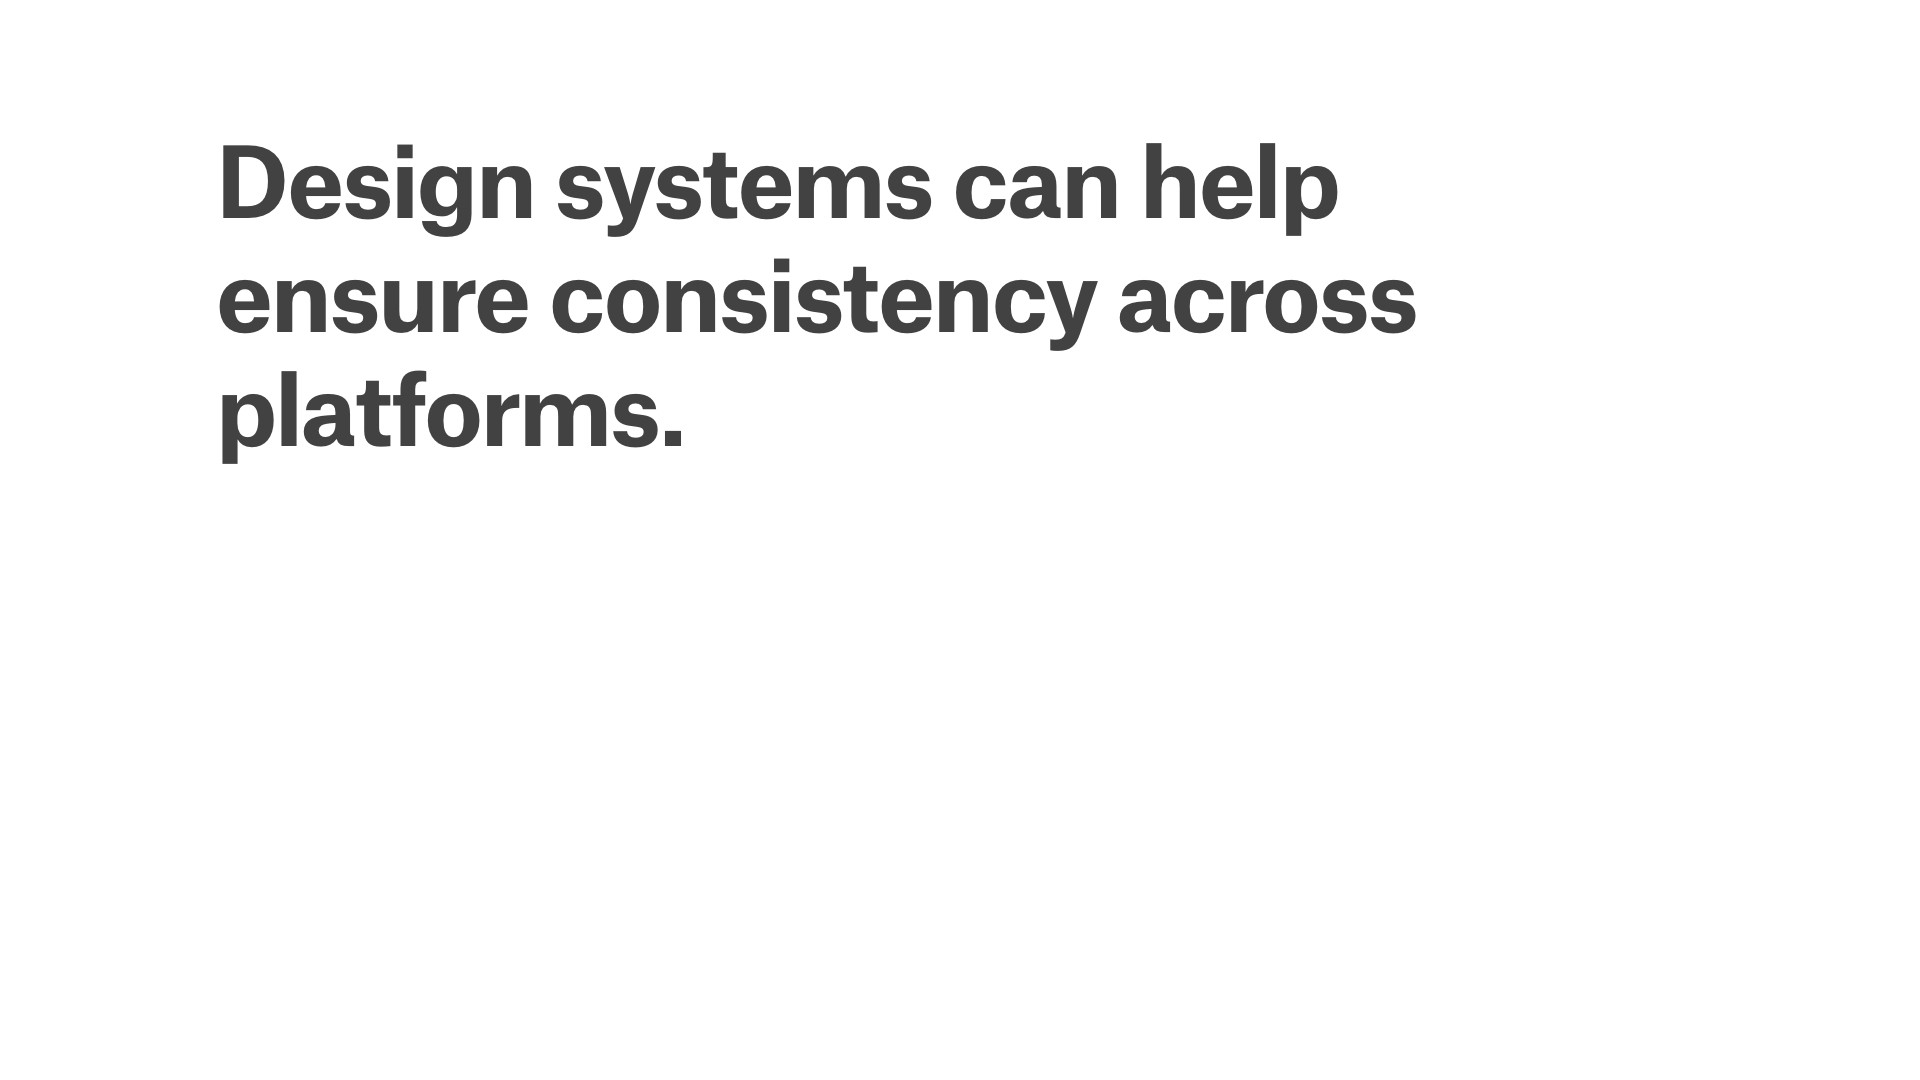 Design systems help ensuring consistency across platforms.